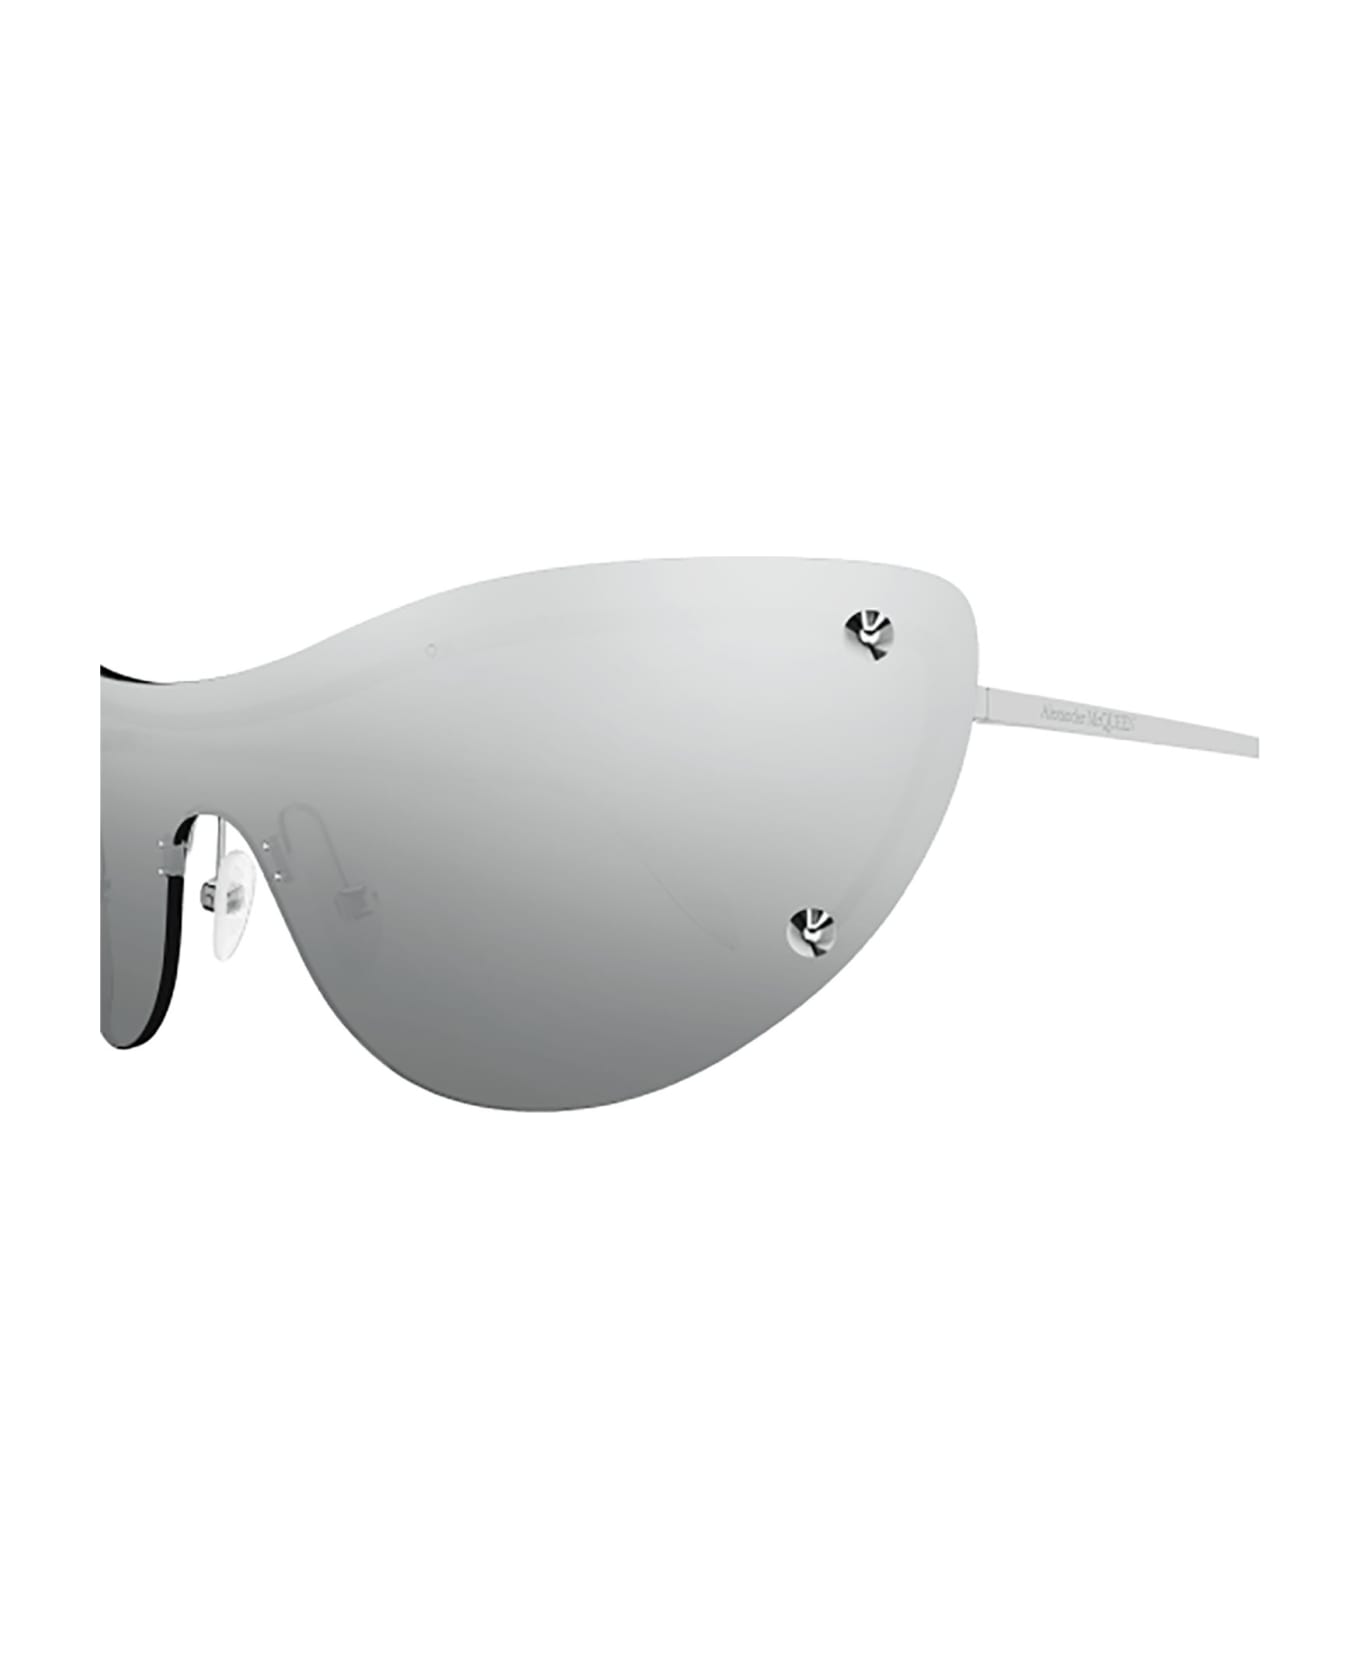 Alexander McQueen Eyewear AM0413S Sunglasses - Silver Silver Silver